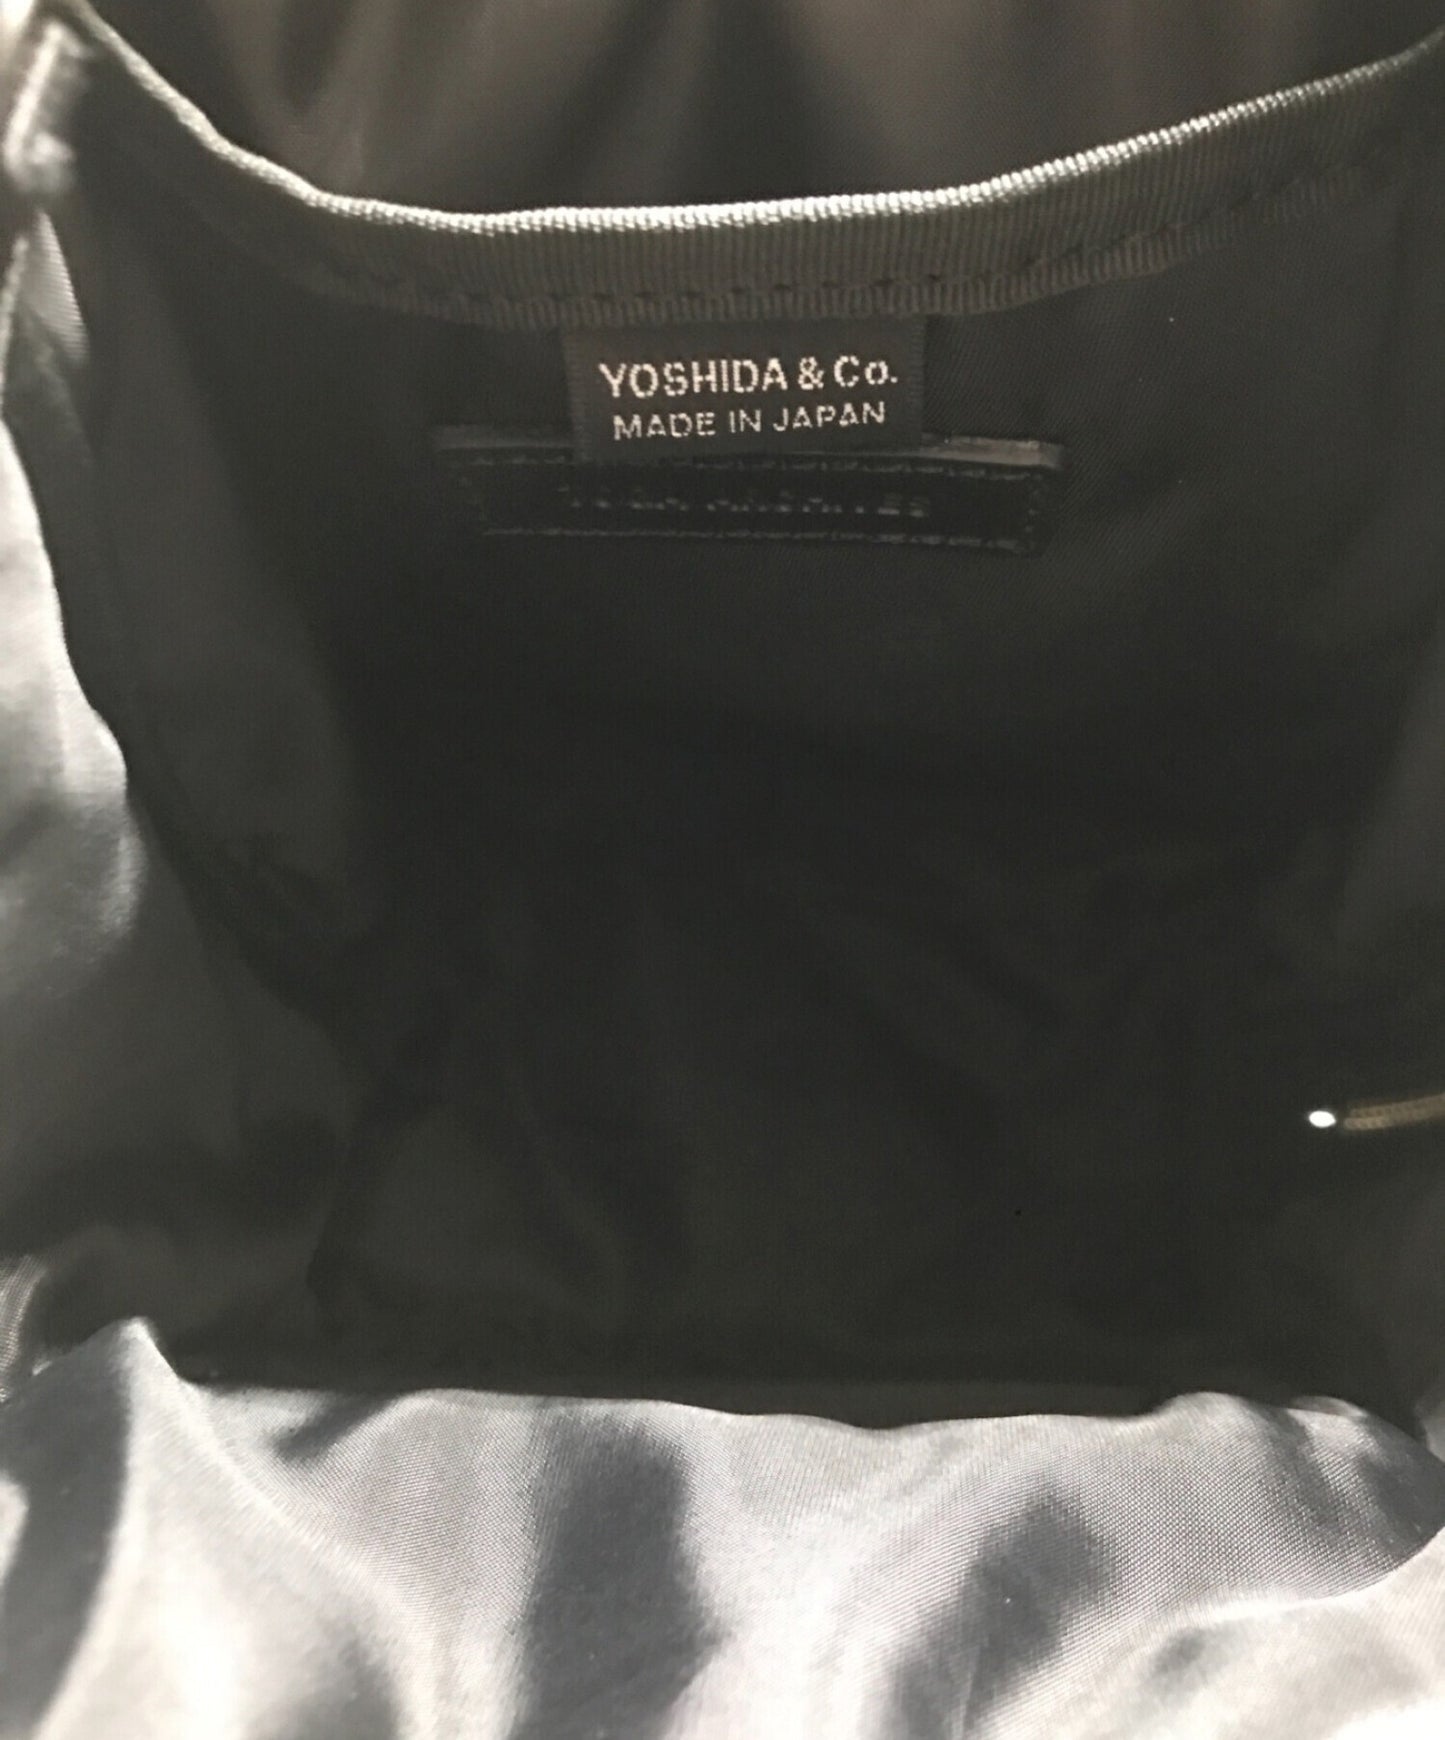 Toga Archives × Porter String Bag กระเป๋าสะพายกระเป๋าถือกระเป๋า TC21-AG503